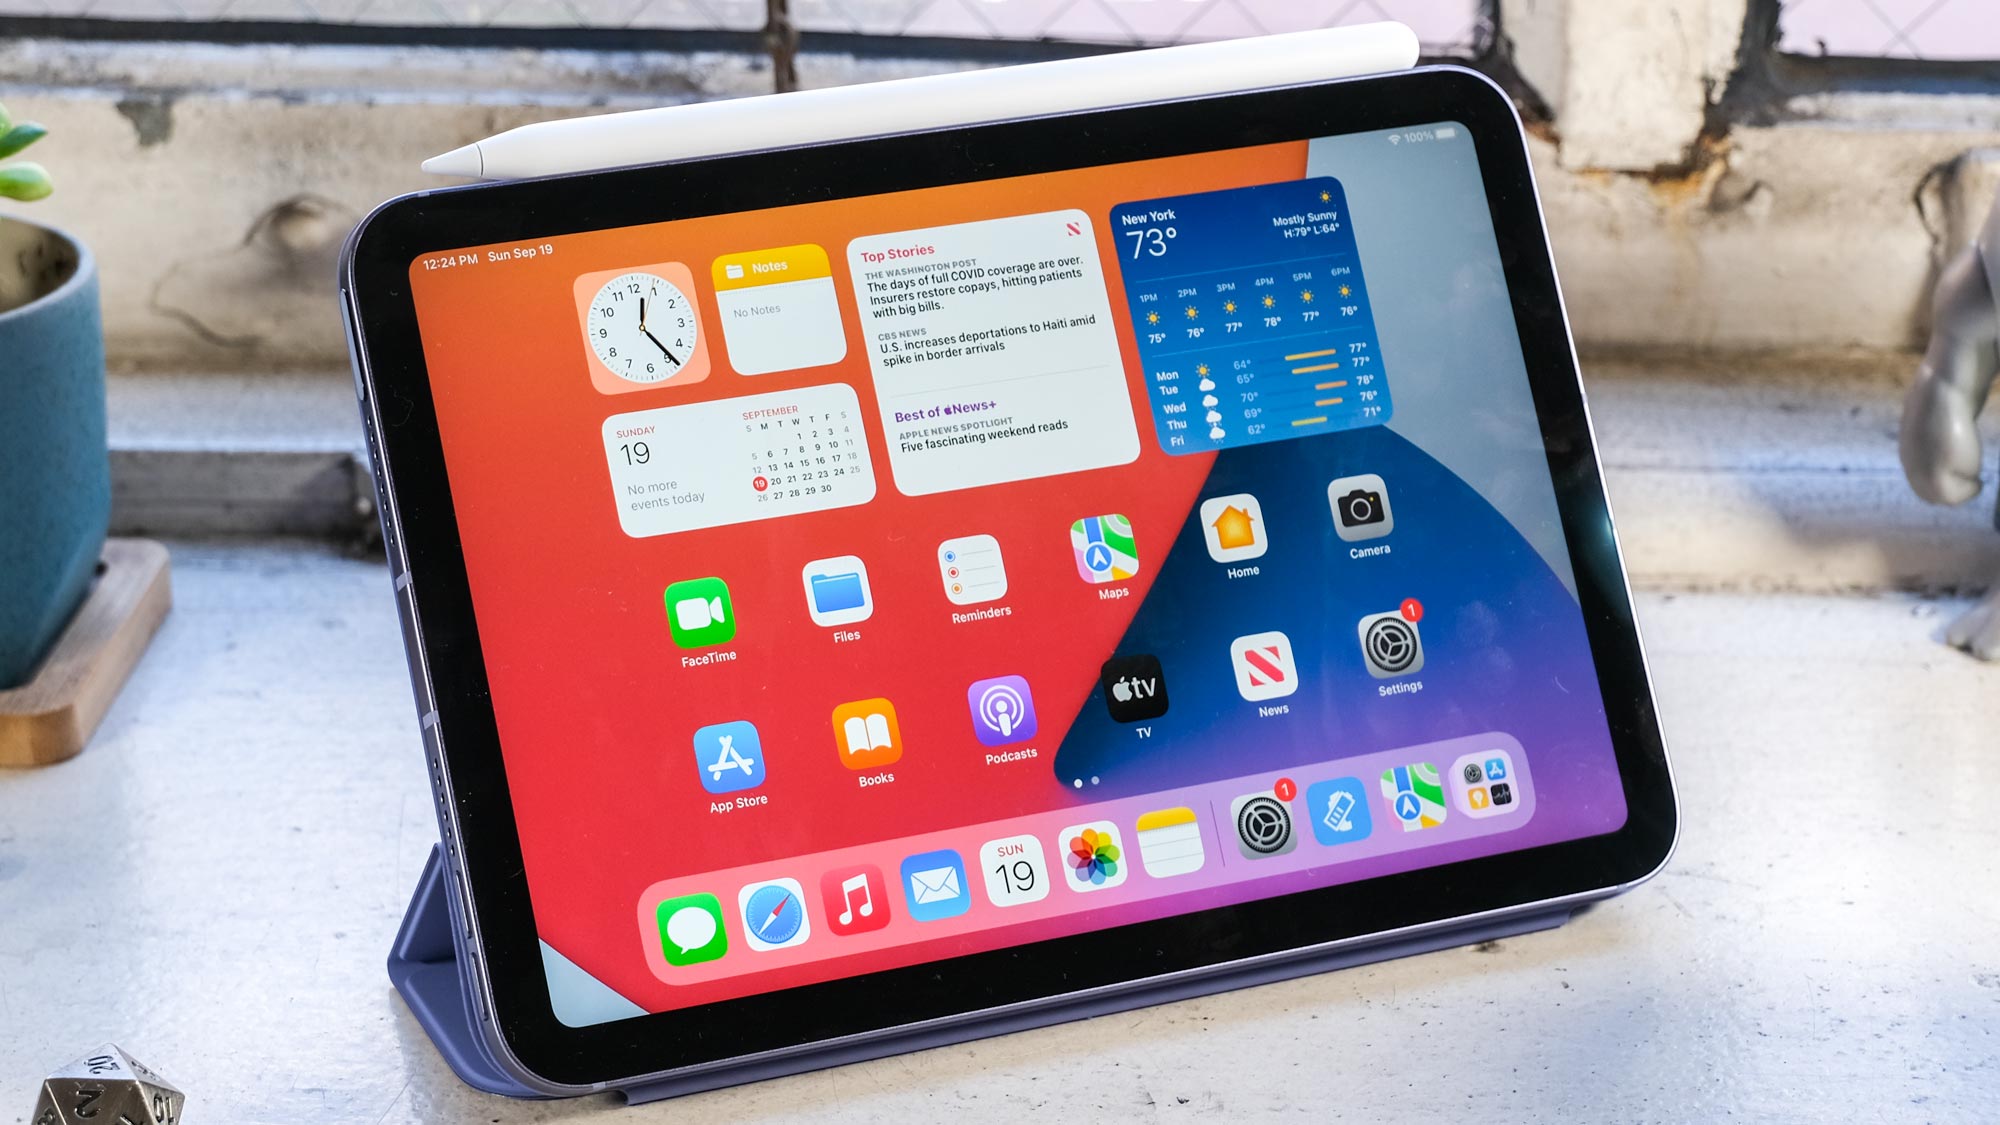 kjole Ære Fantastiske Apple iPad mini 6 (2021) review: Awesome and ultraportable | Tom's Guide